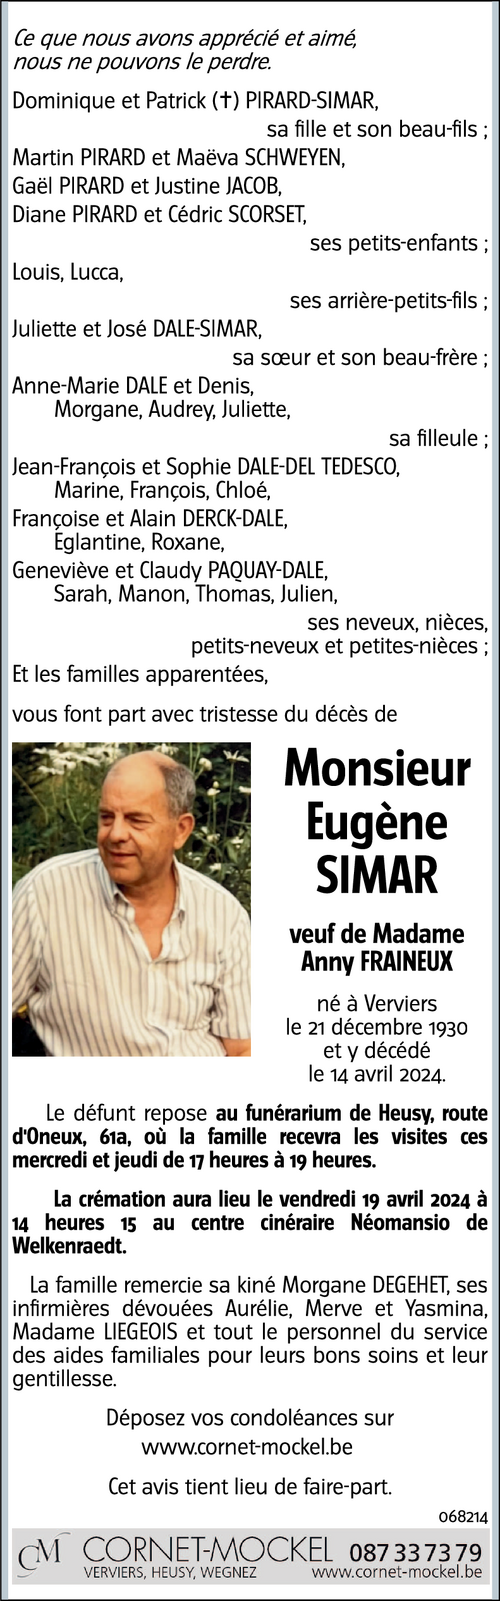 Eugène SIMAR